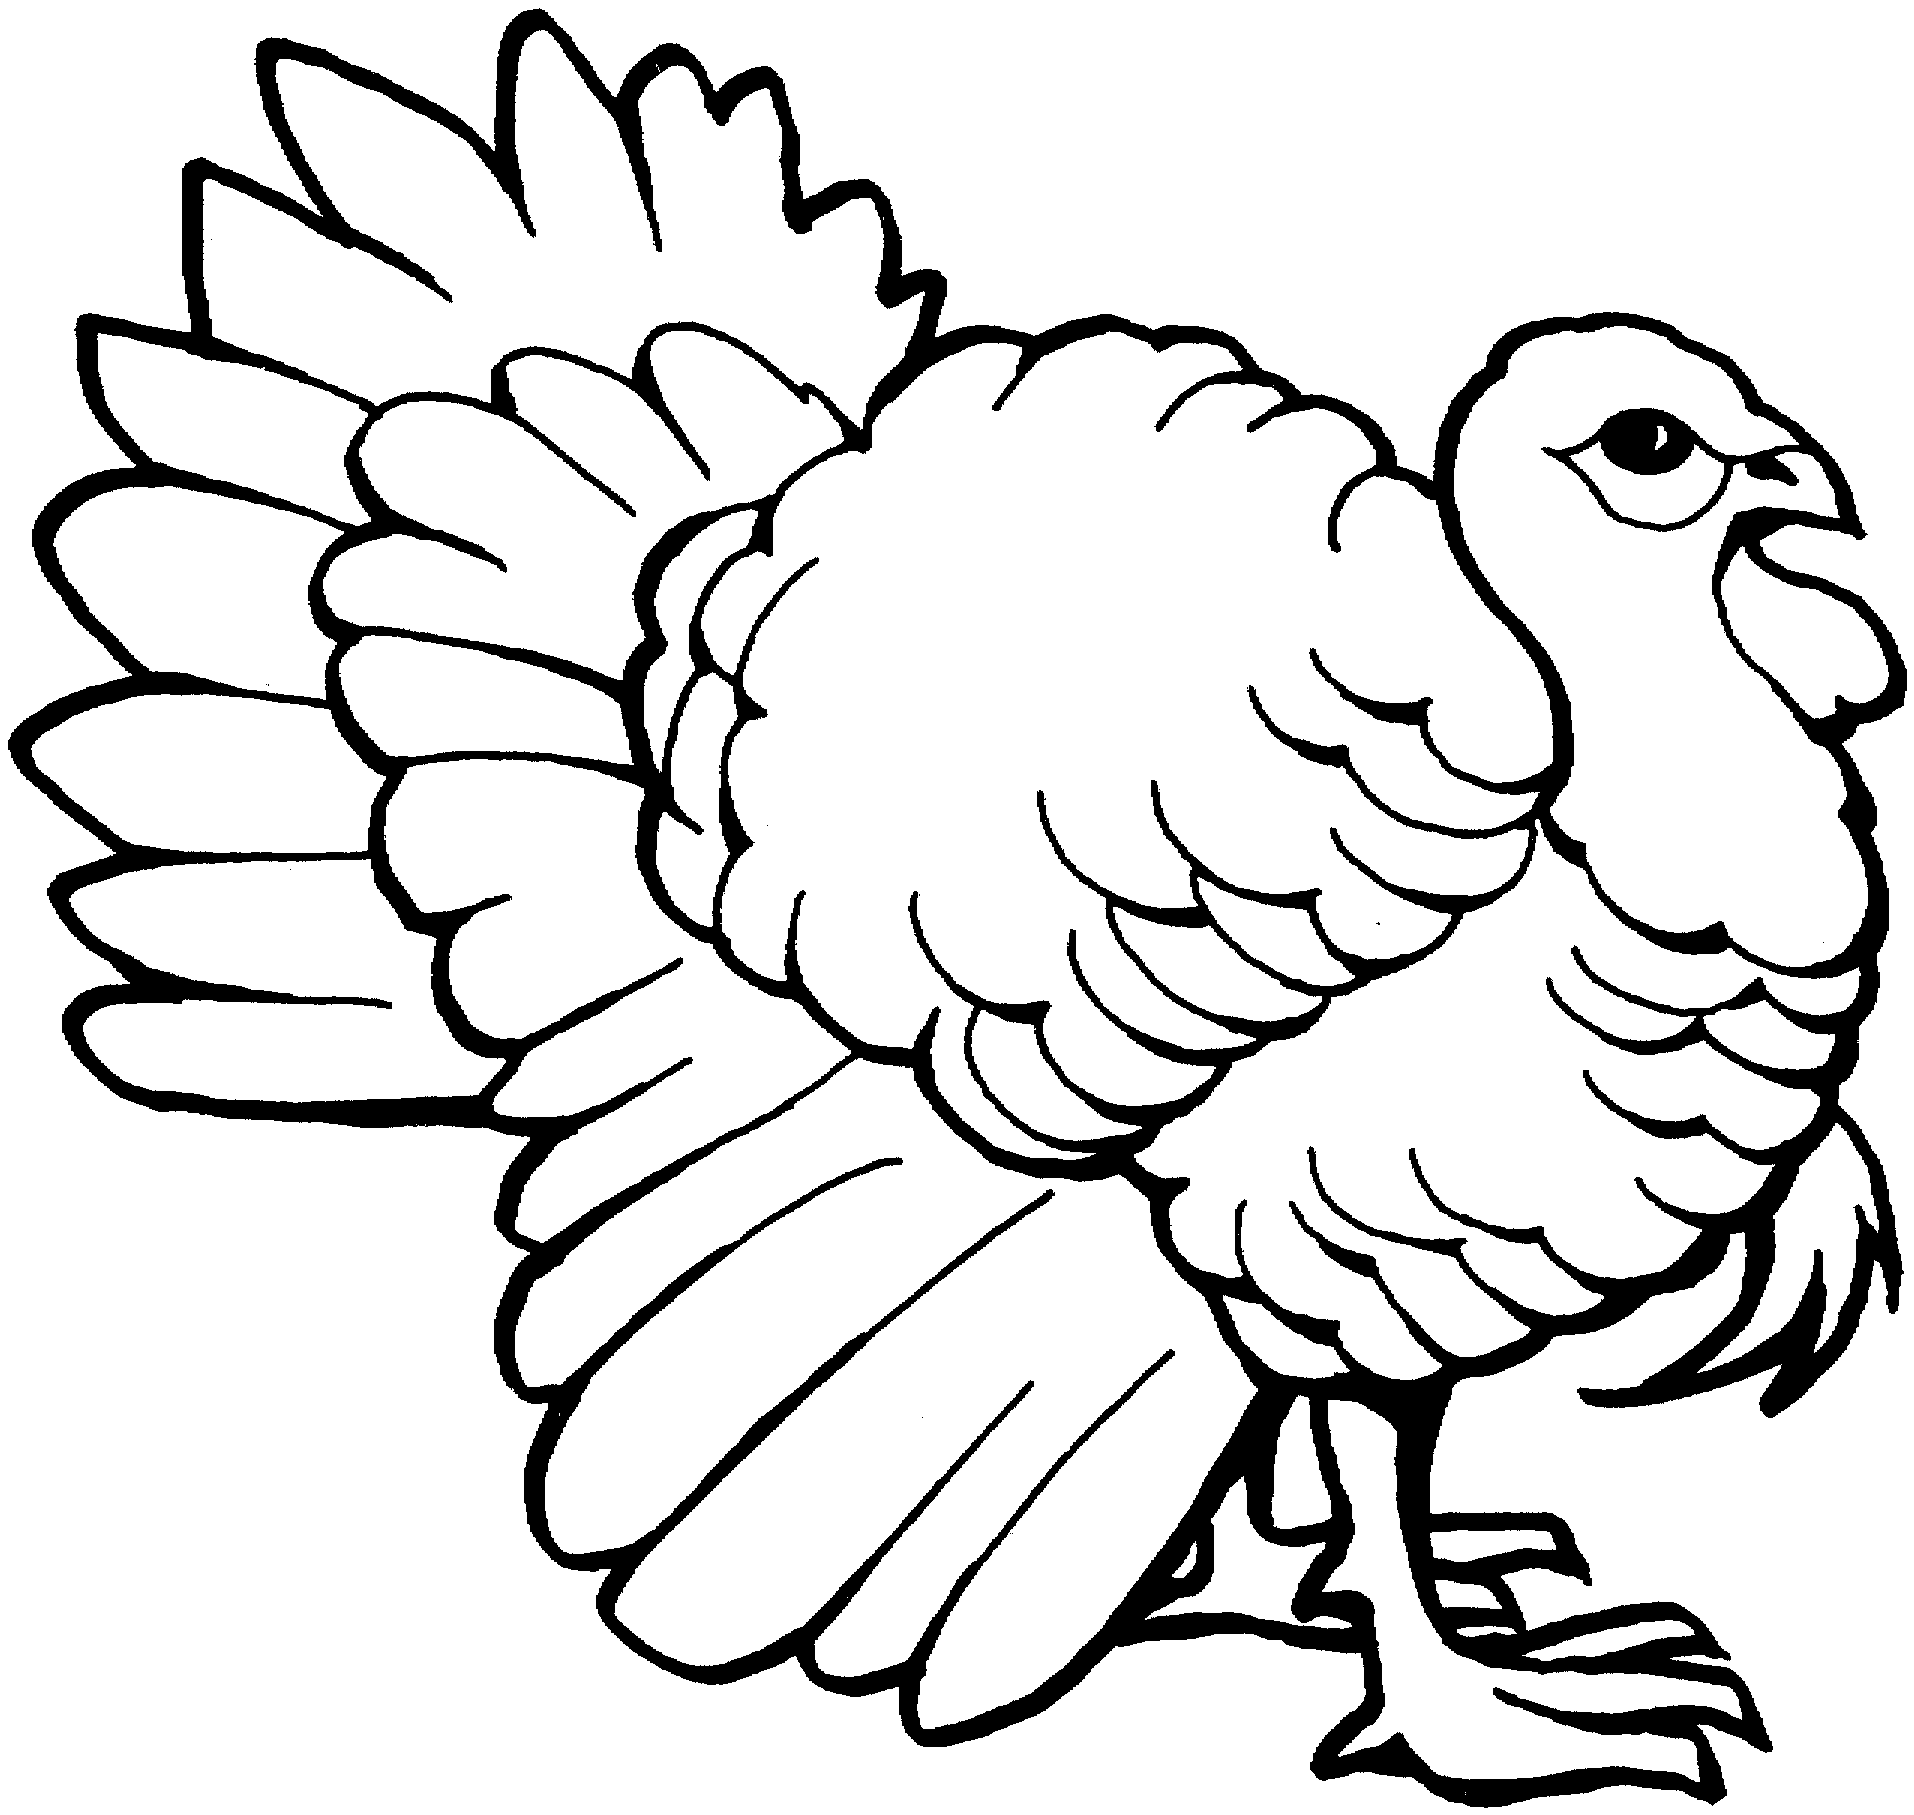 Turkey black and white turkey clipart outline clipartfox